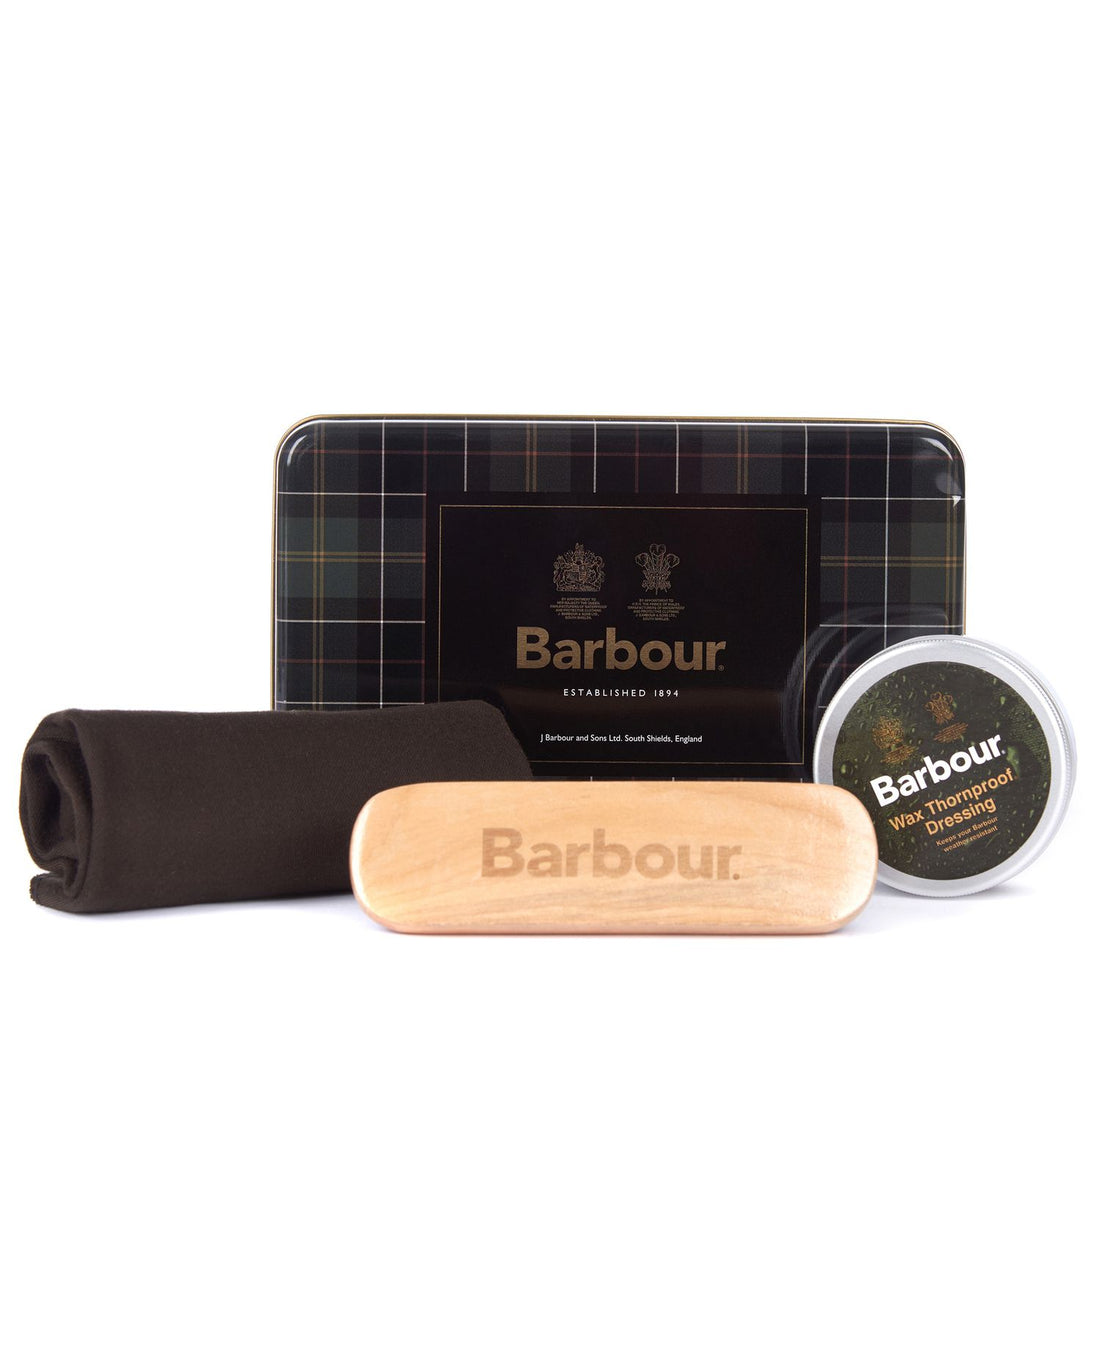 Barbour - Jacket Care Kit